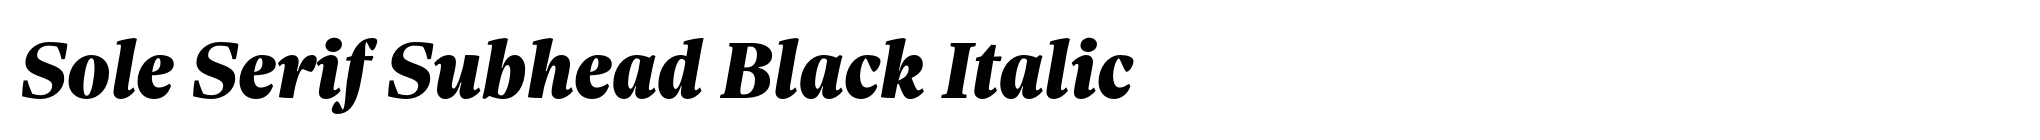 Sole Serif Subhead Black Italic image